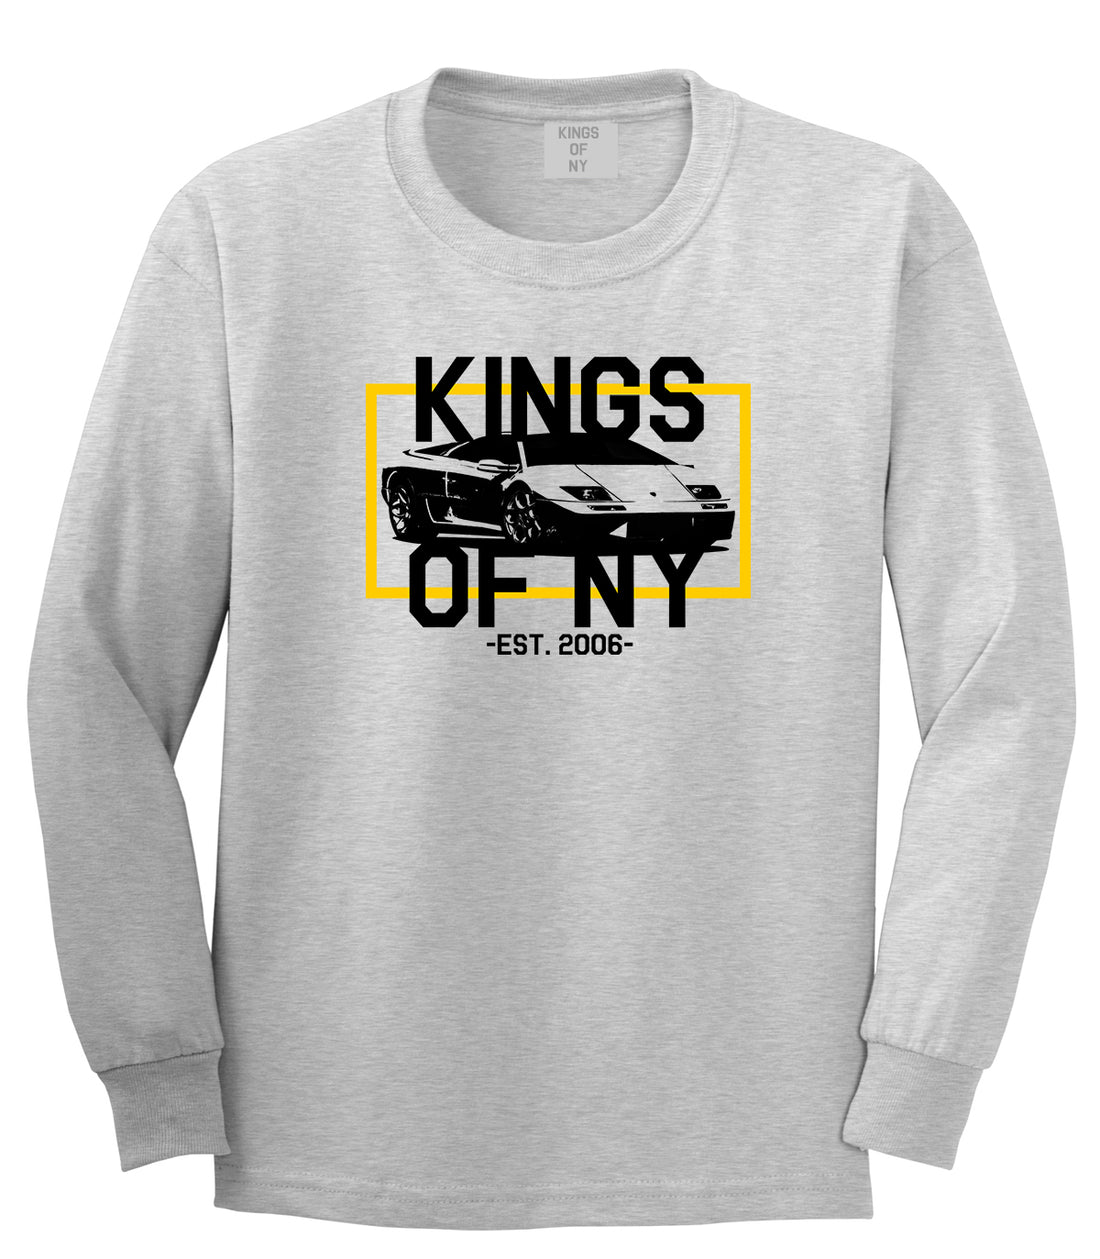 Lambo Fastlane Est 2006 Mens Long Sleeve T-Shirt Grey by Kings Of NY